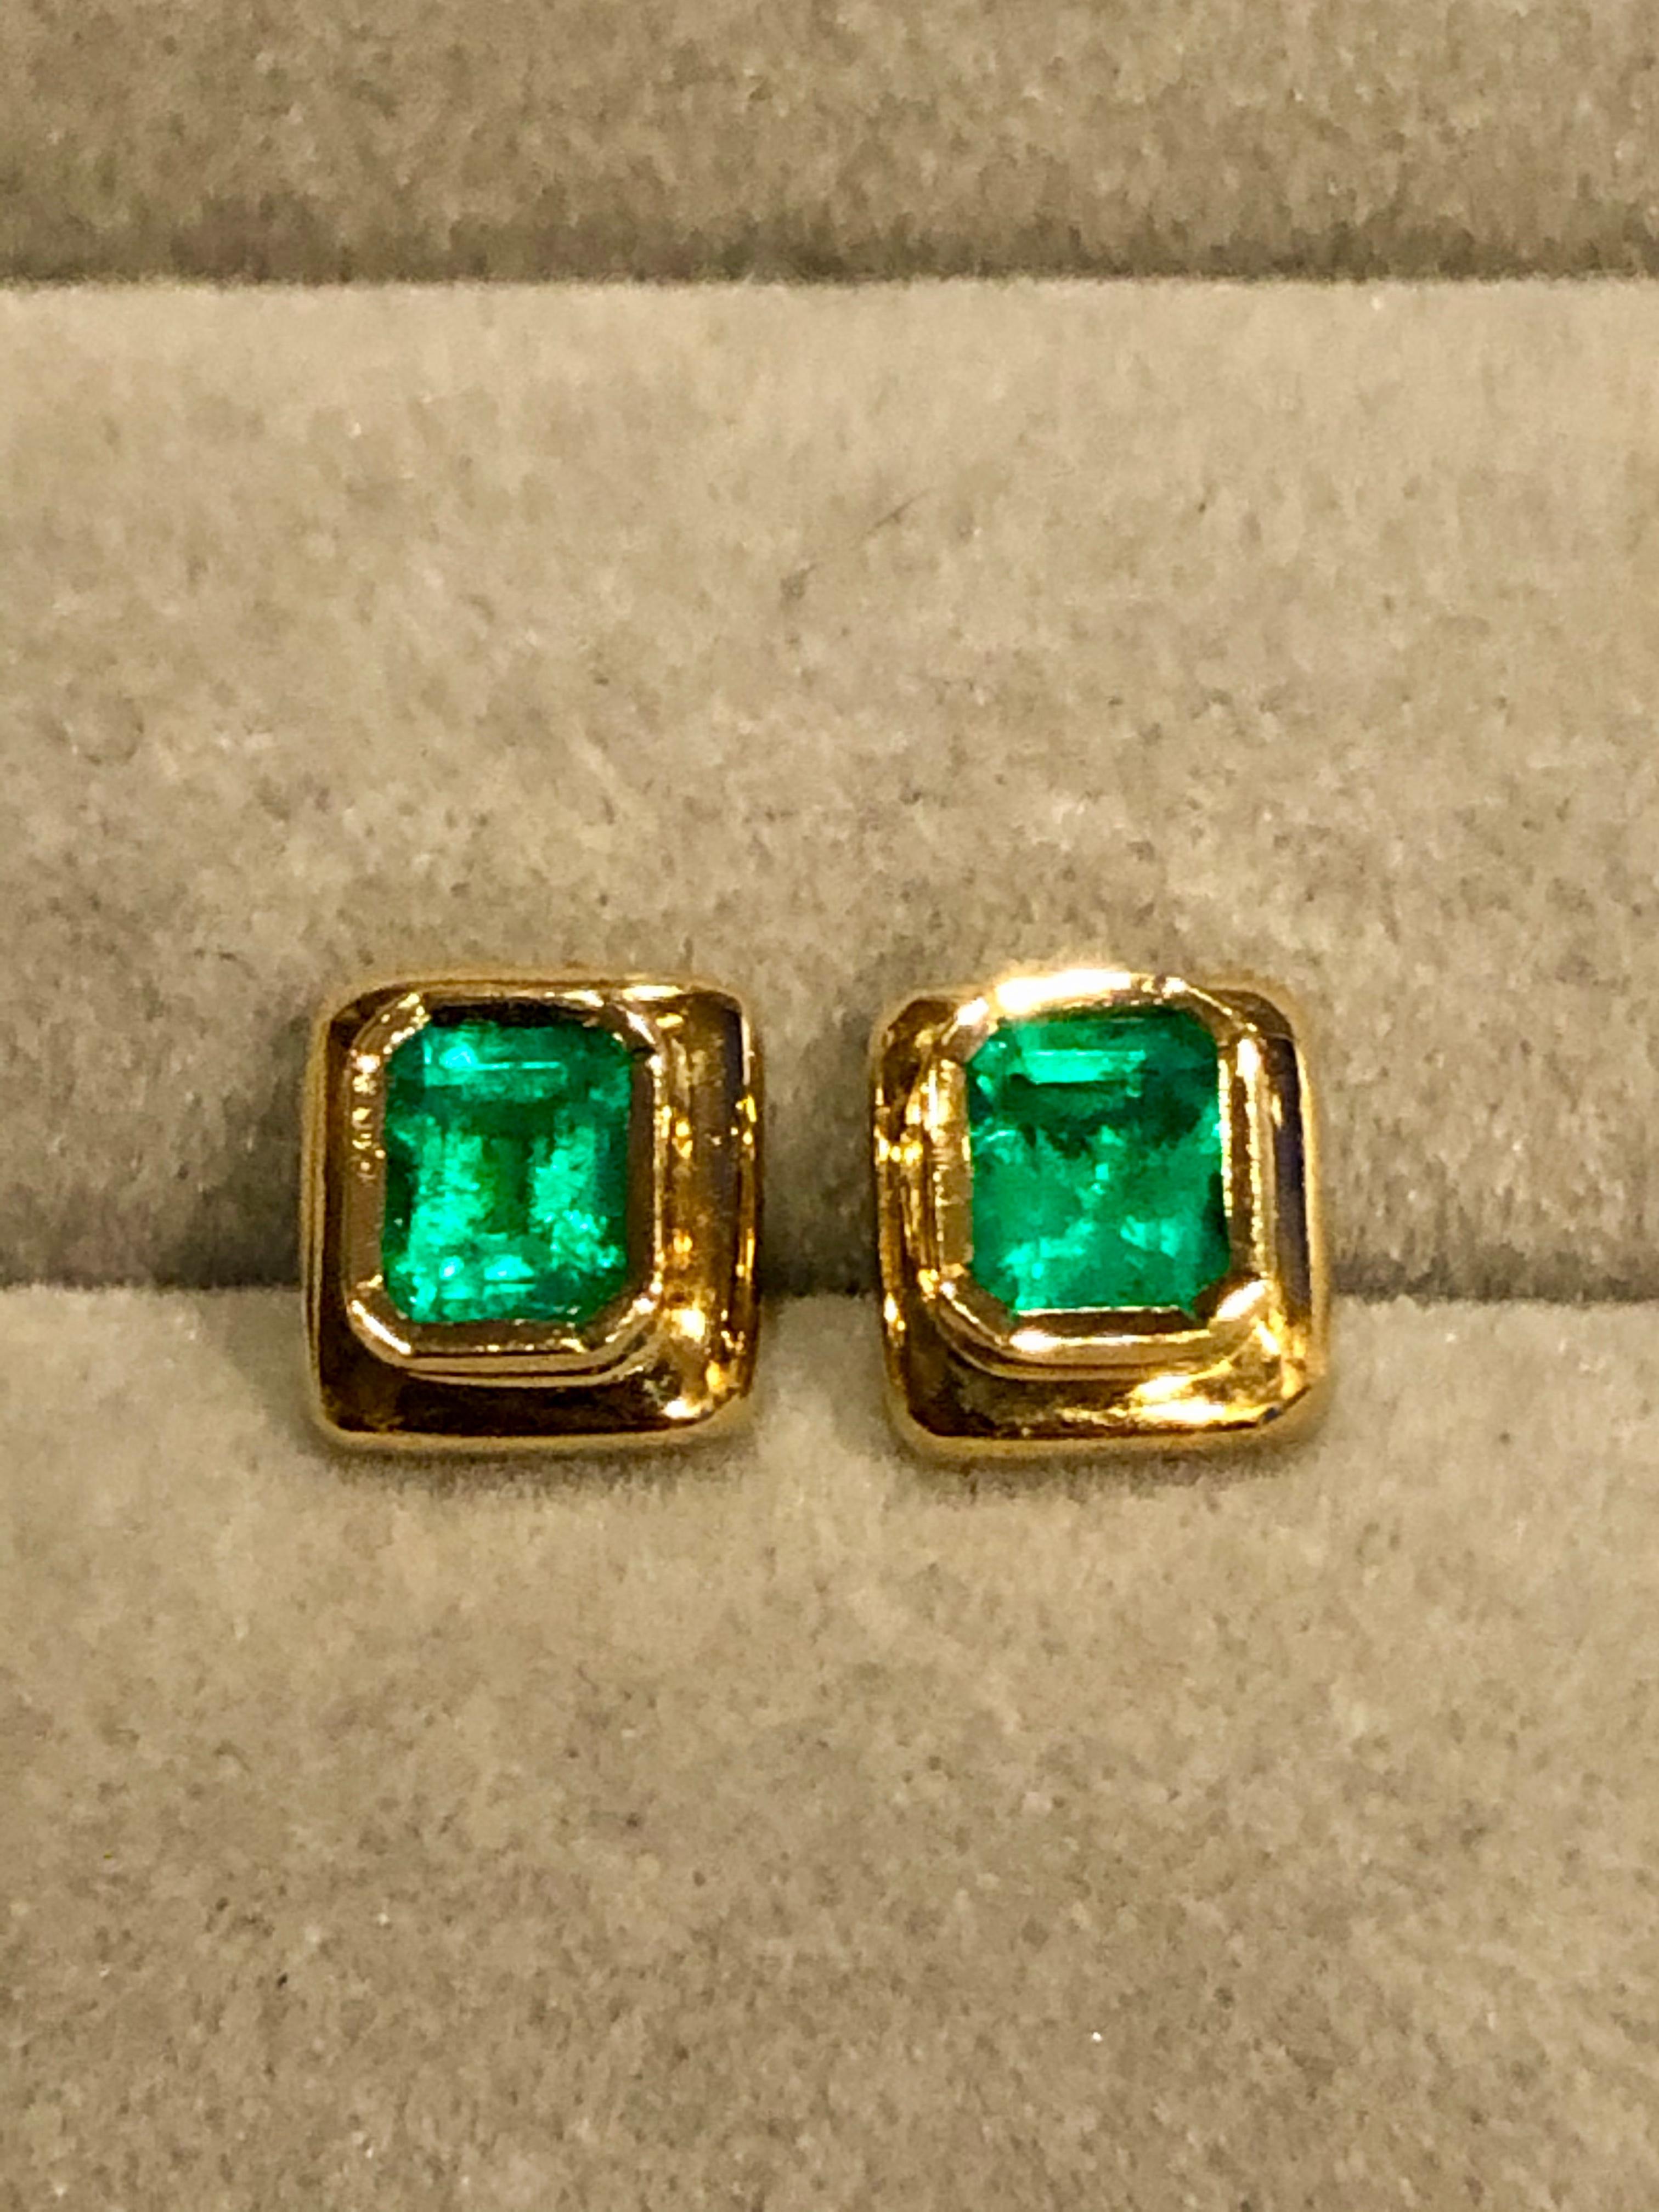 Elegant Emerald Stud Earrings Emerald  Cut Colombian Emerald 18 Karat Yellow Gold 
Natural Medium AAA Green Color Emerald Cut Colombian Emeralds Weight approx.0.80 carat. Made of Solid 18K Yellow Gold. Push Backs Bezel Set